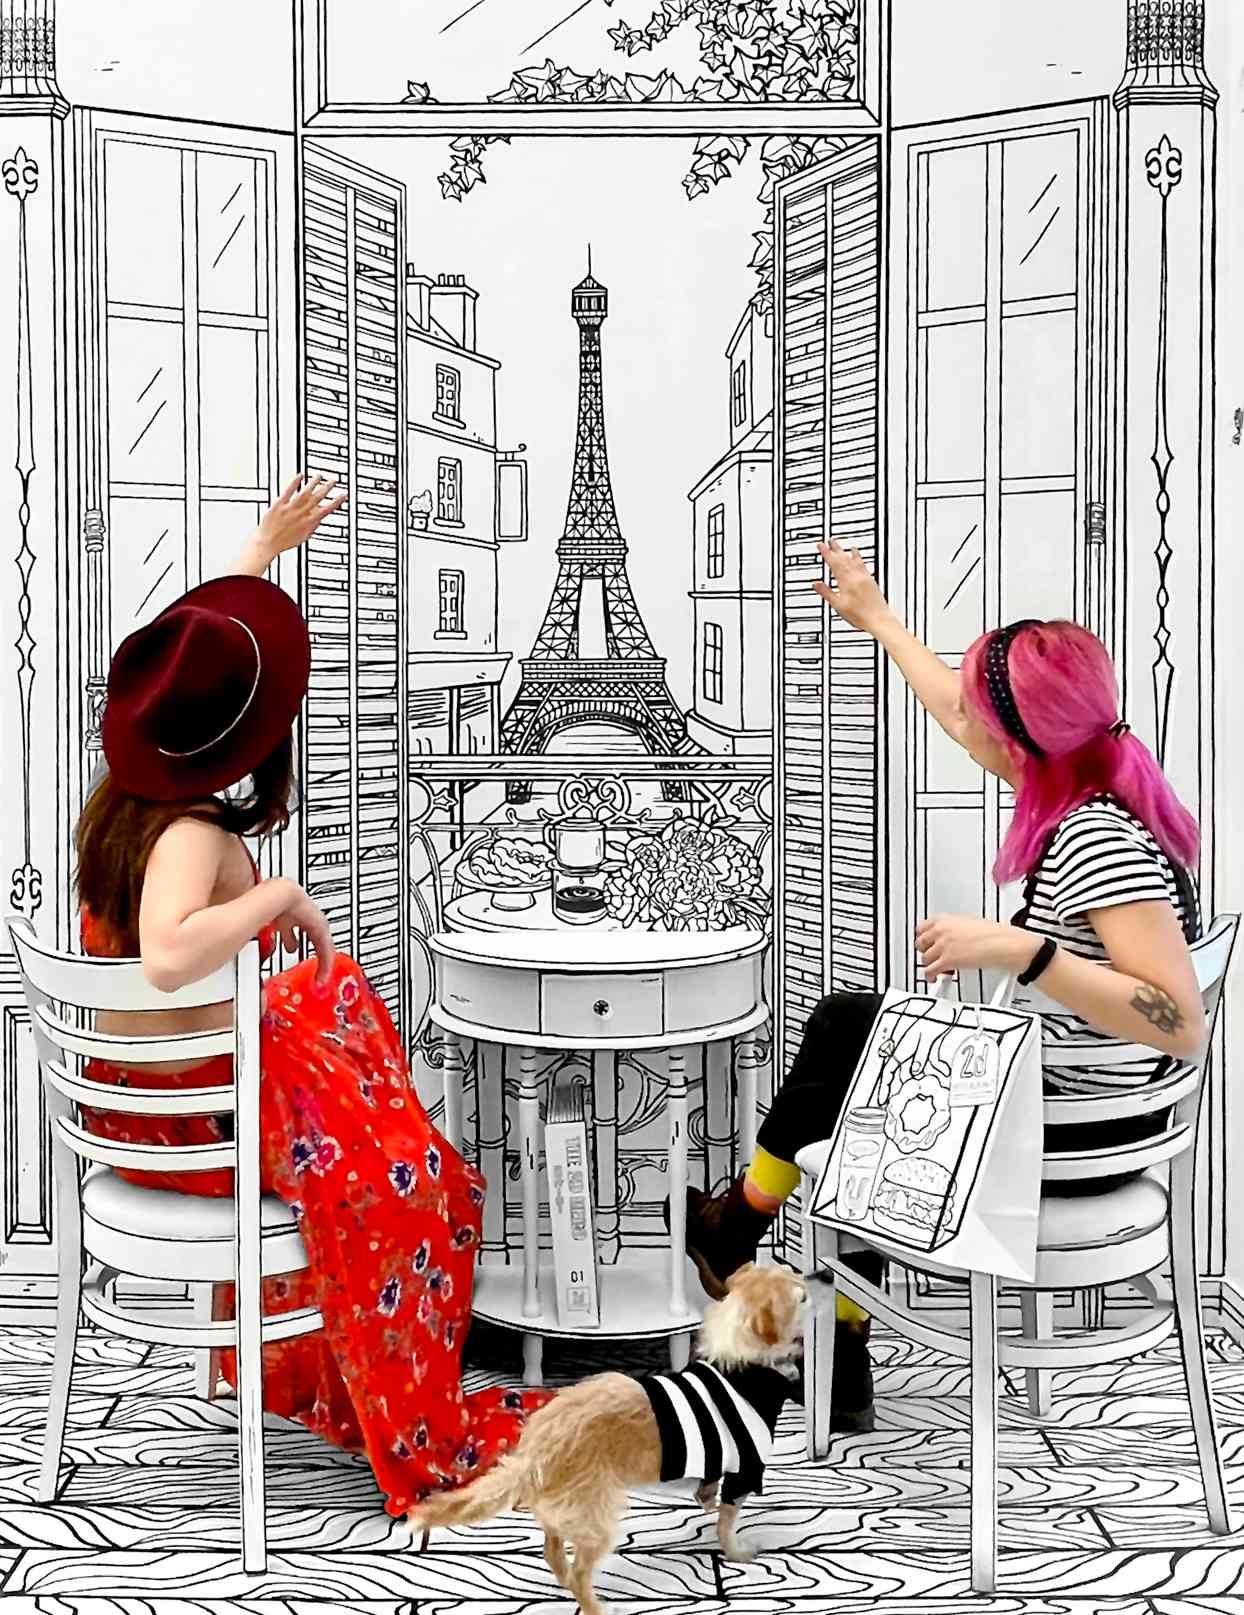 women at optical illusion cafe